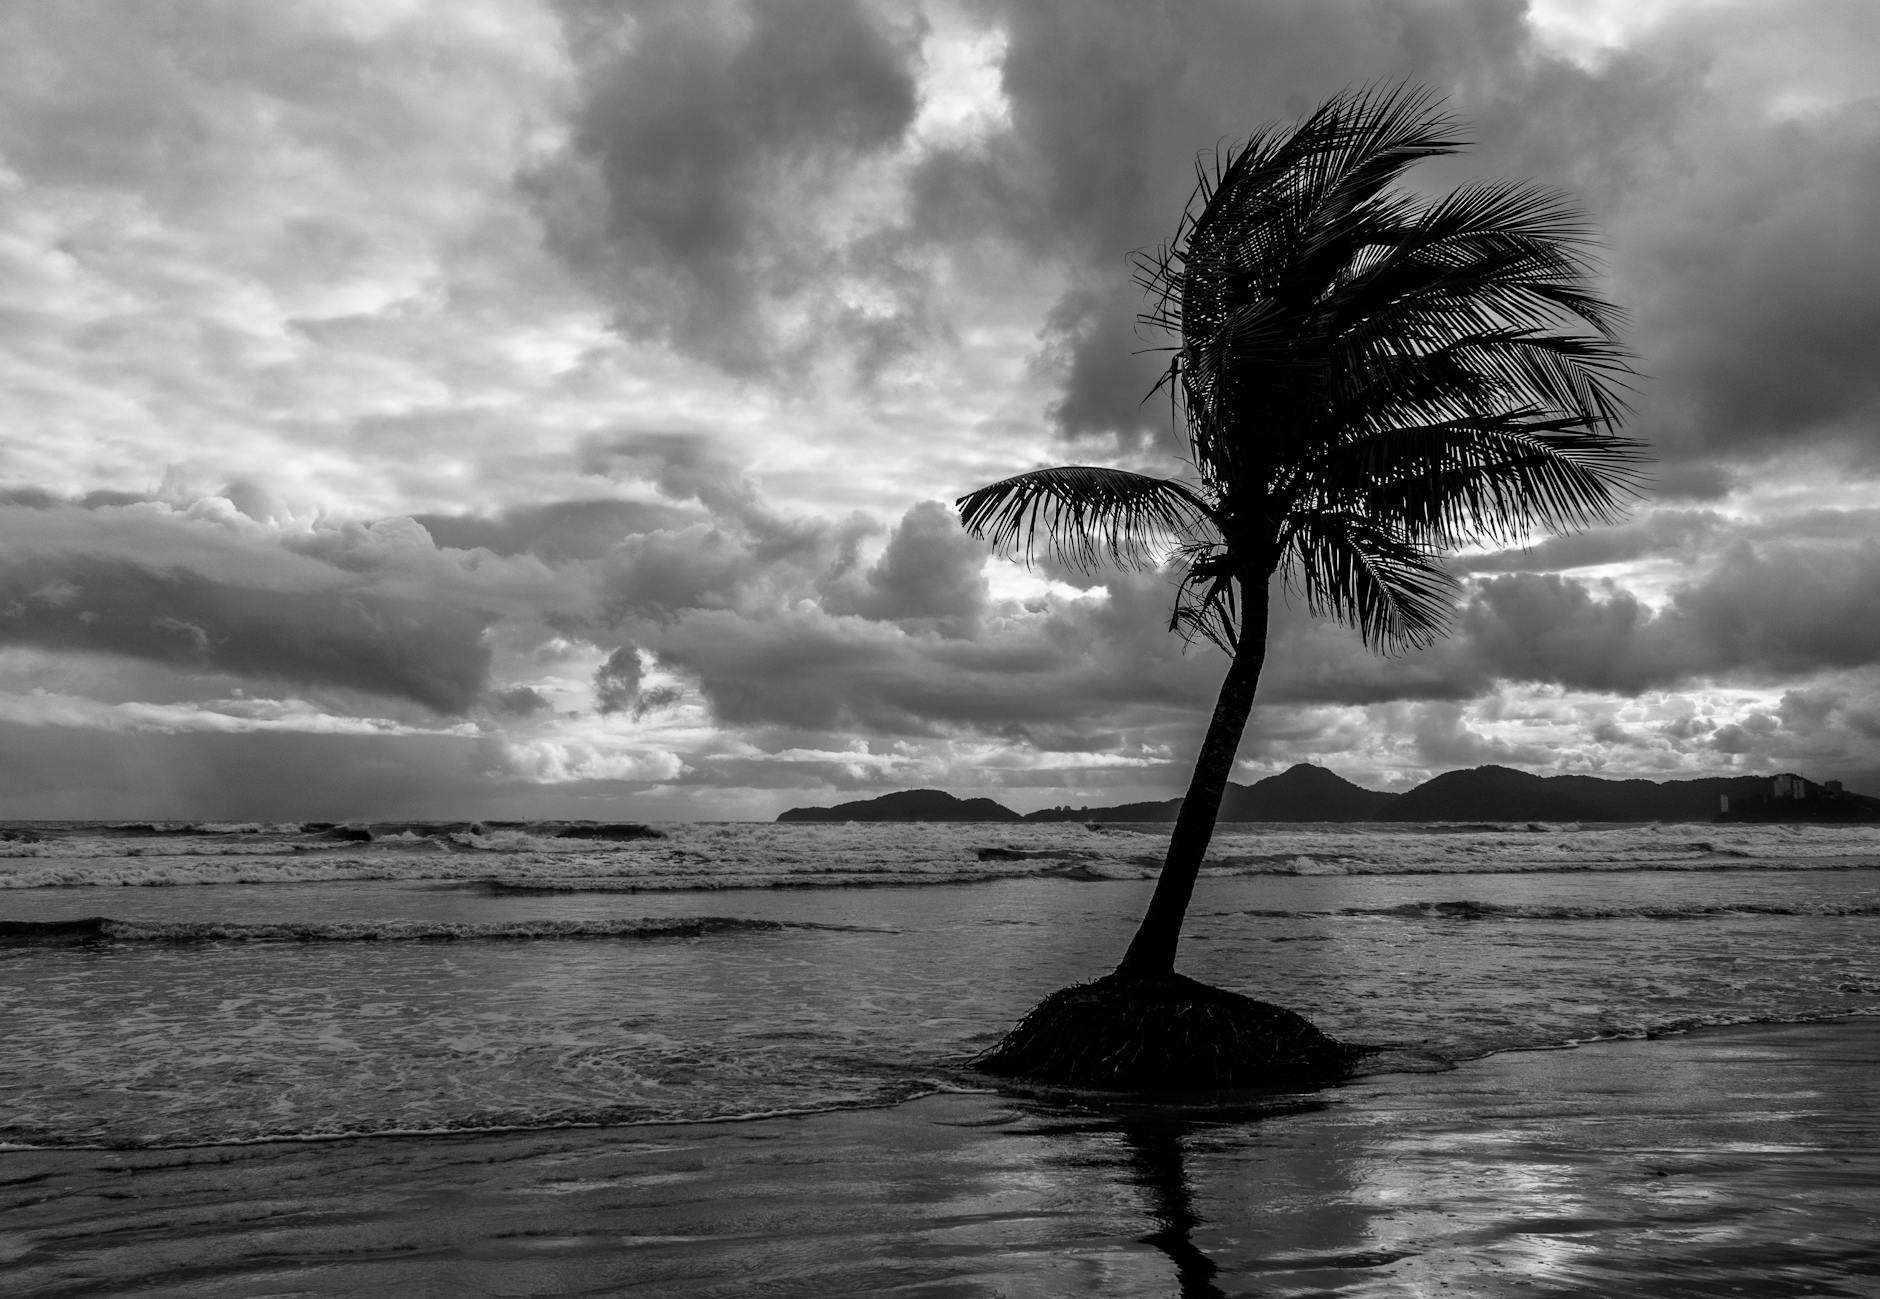 stormy sea with palm tree on beach under dramatic sky